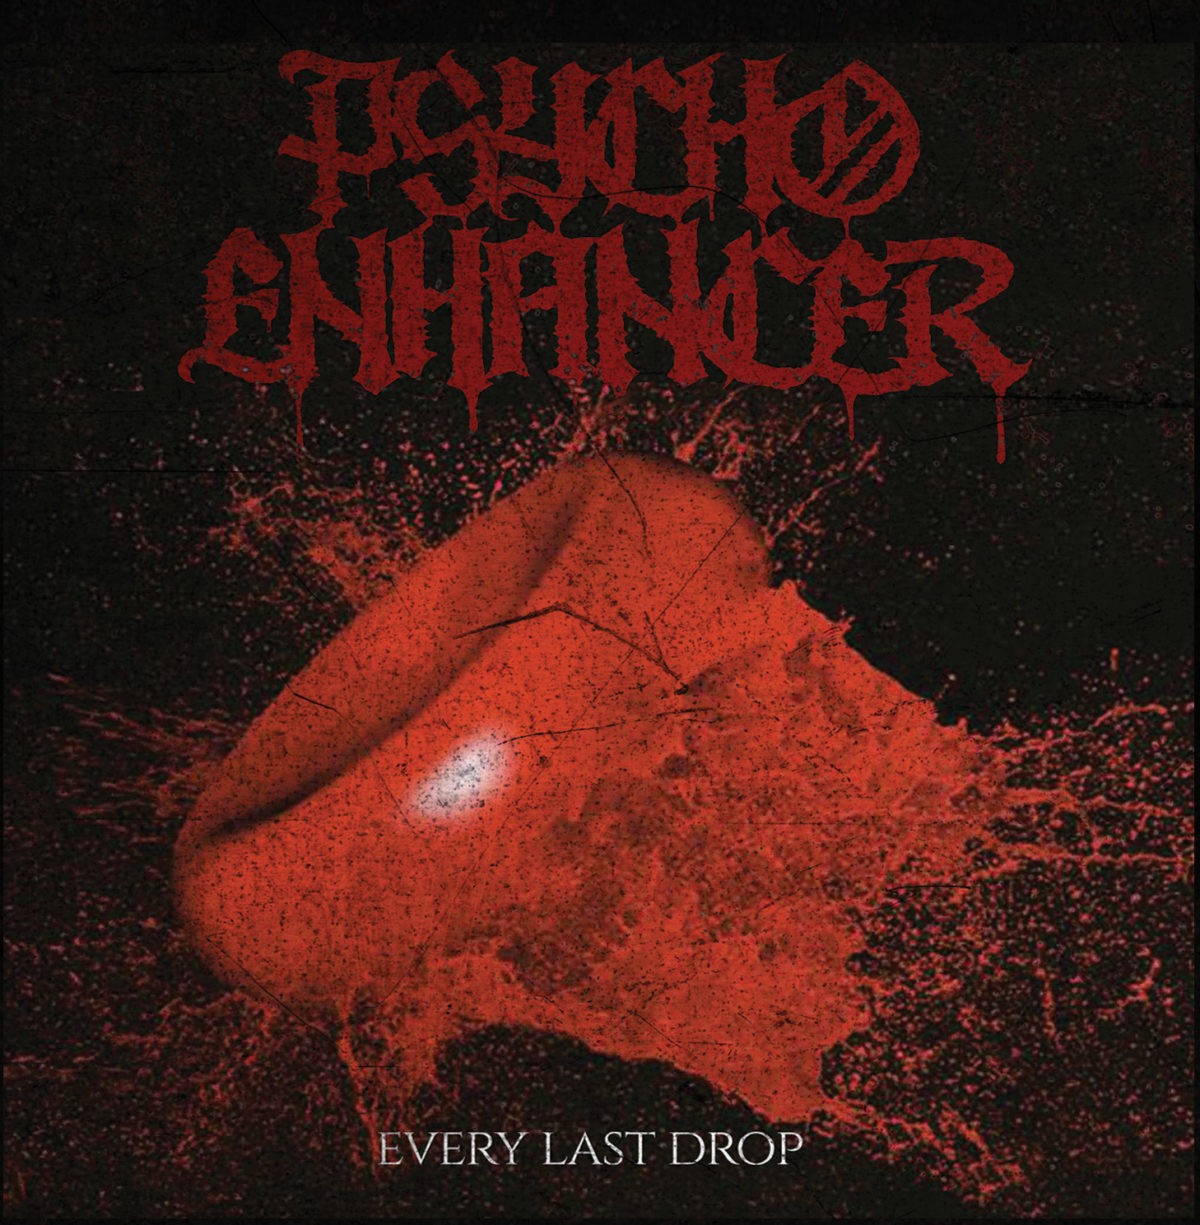 Psycho Enhancer - Every Last Drop - New Album Cover